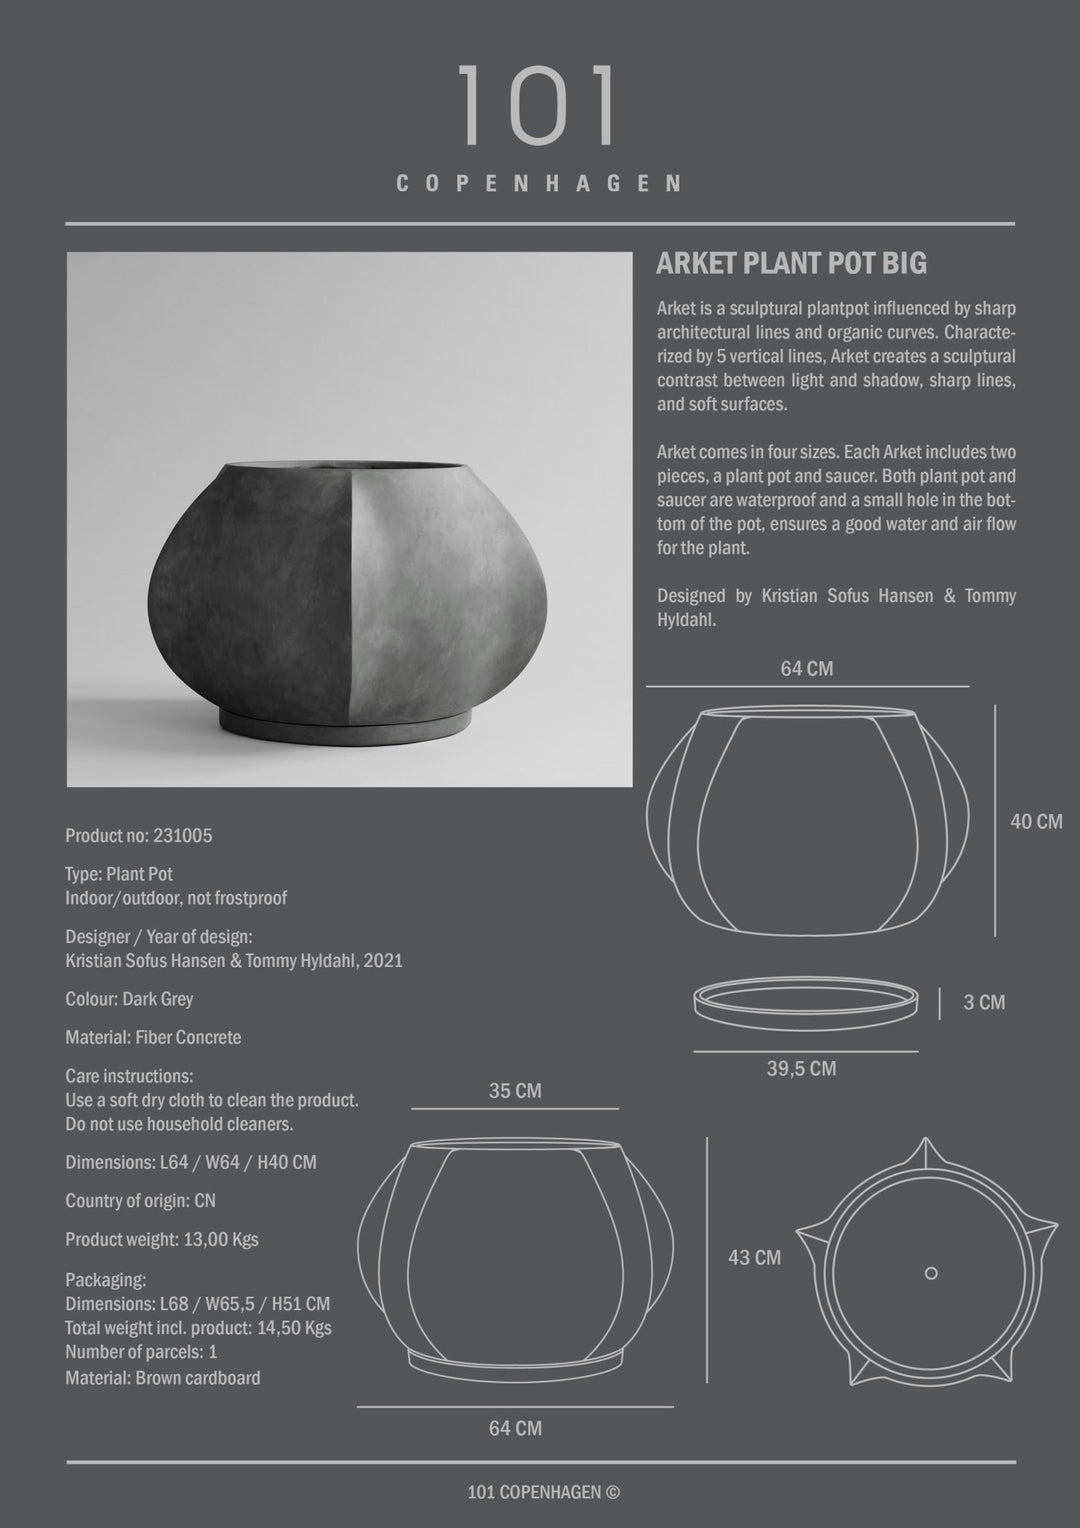 101 Copenhagen Arket Plant Pot - $85.00 - $875.00